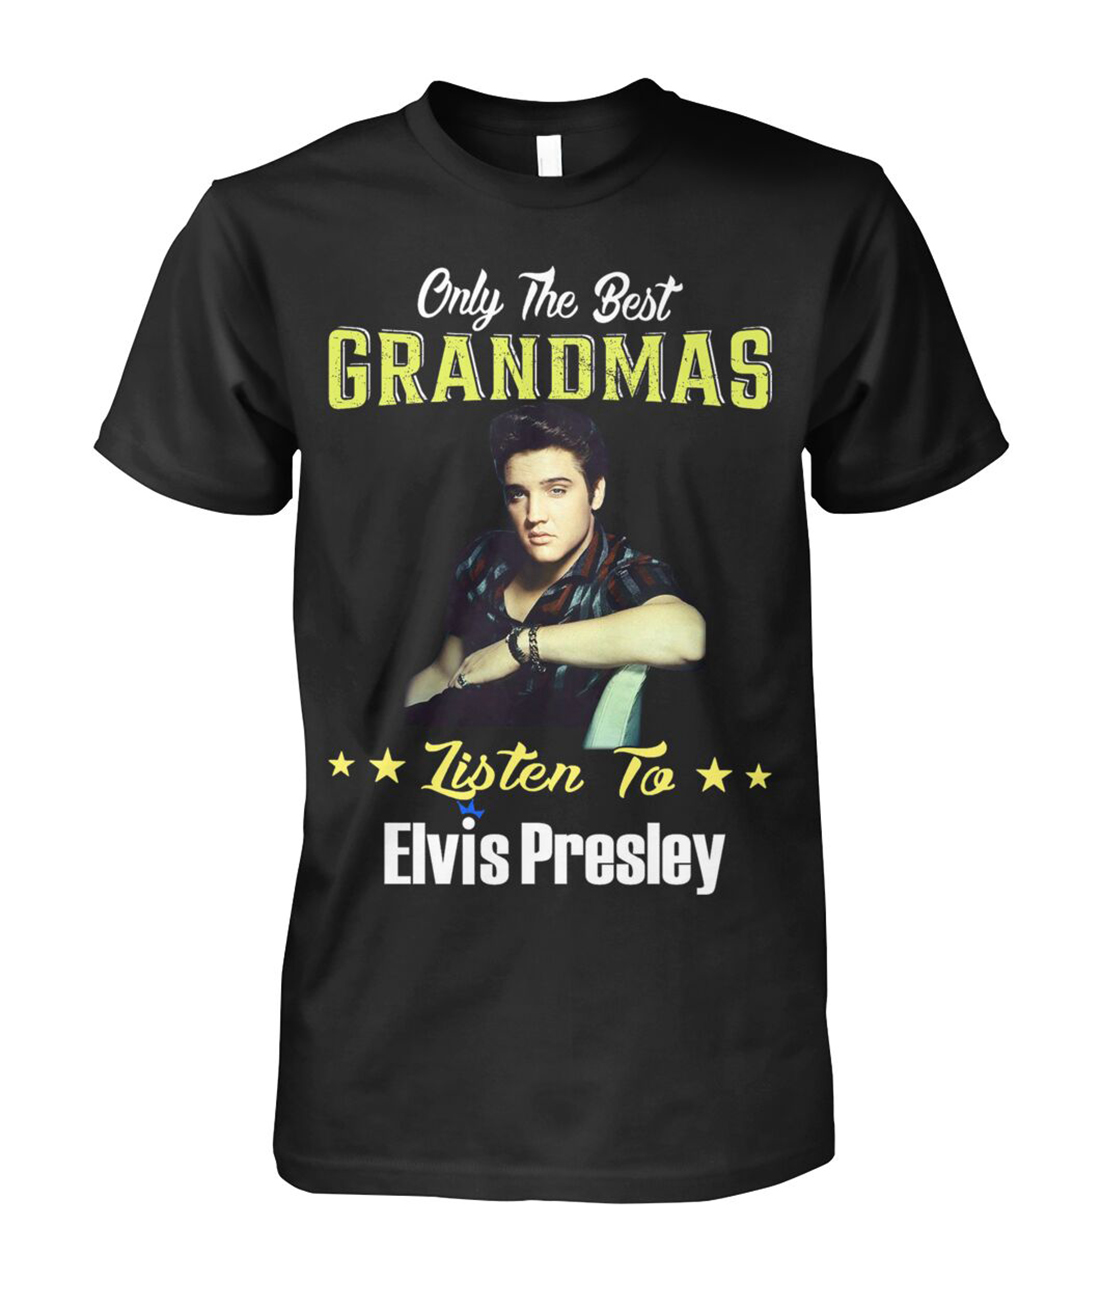 Only the best grandmas listen to Elvis Presley shirt